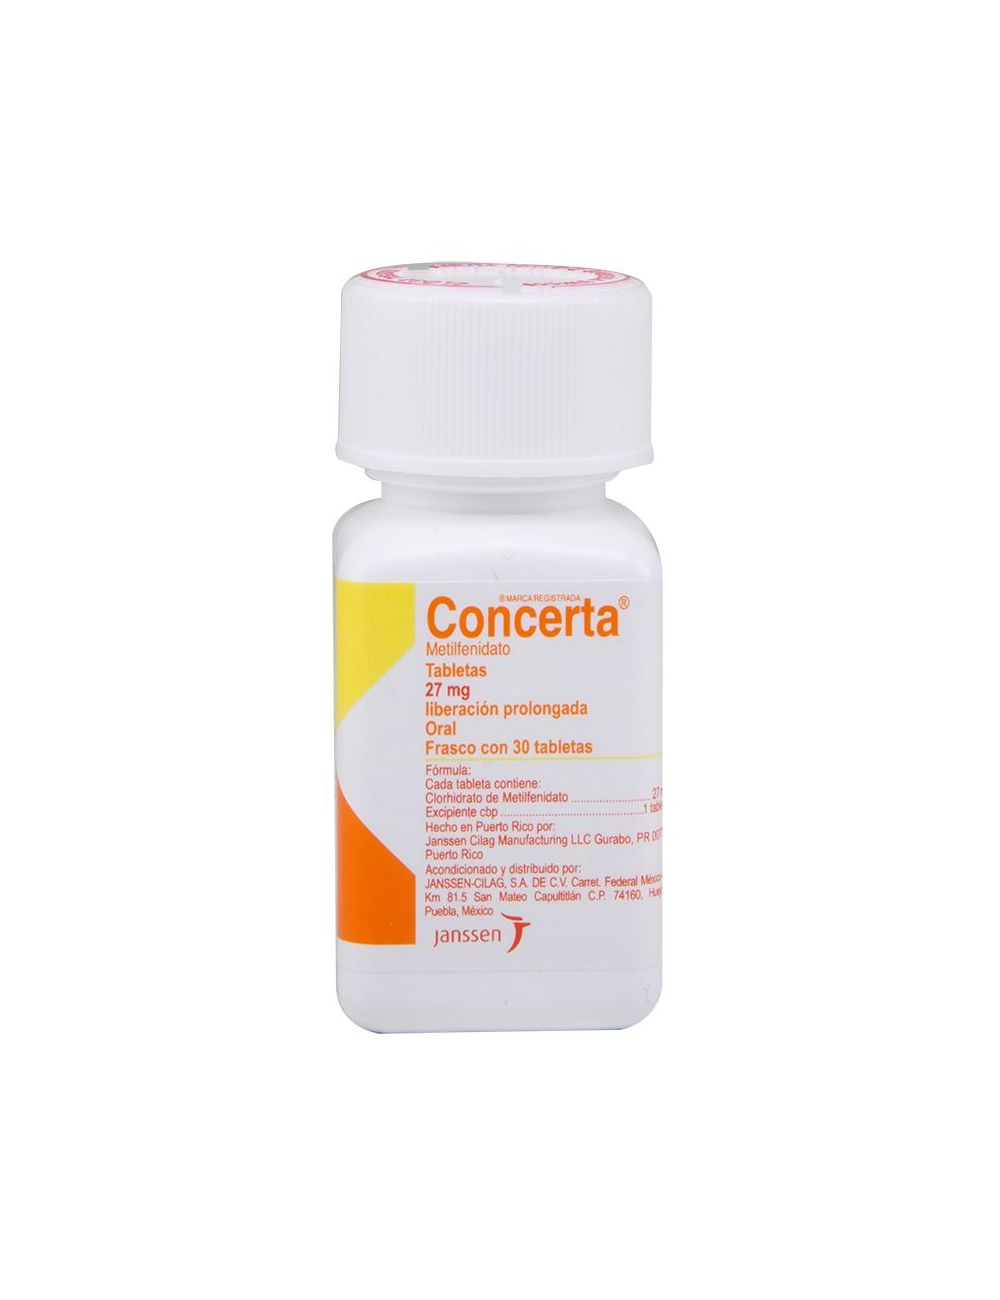 Concerta 27 mg Frasco Con 30 Tabletas - RX1